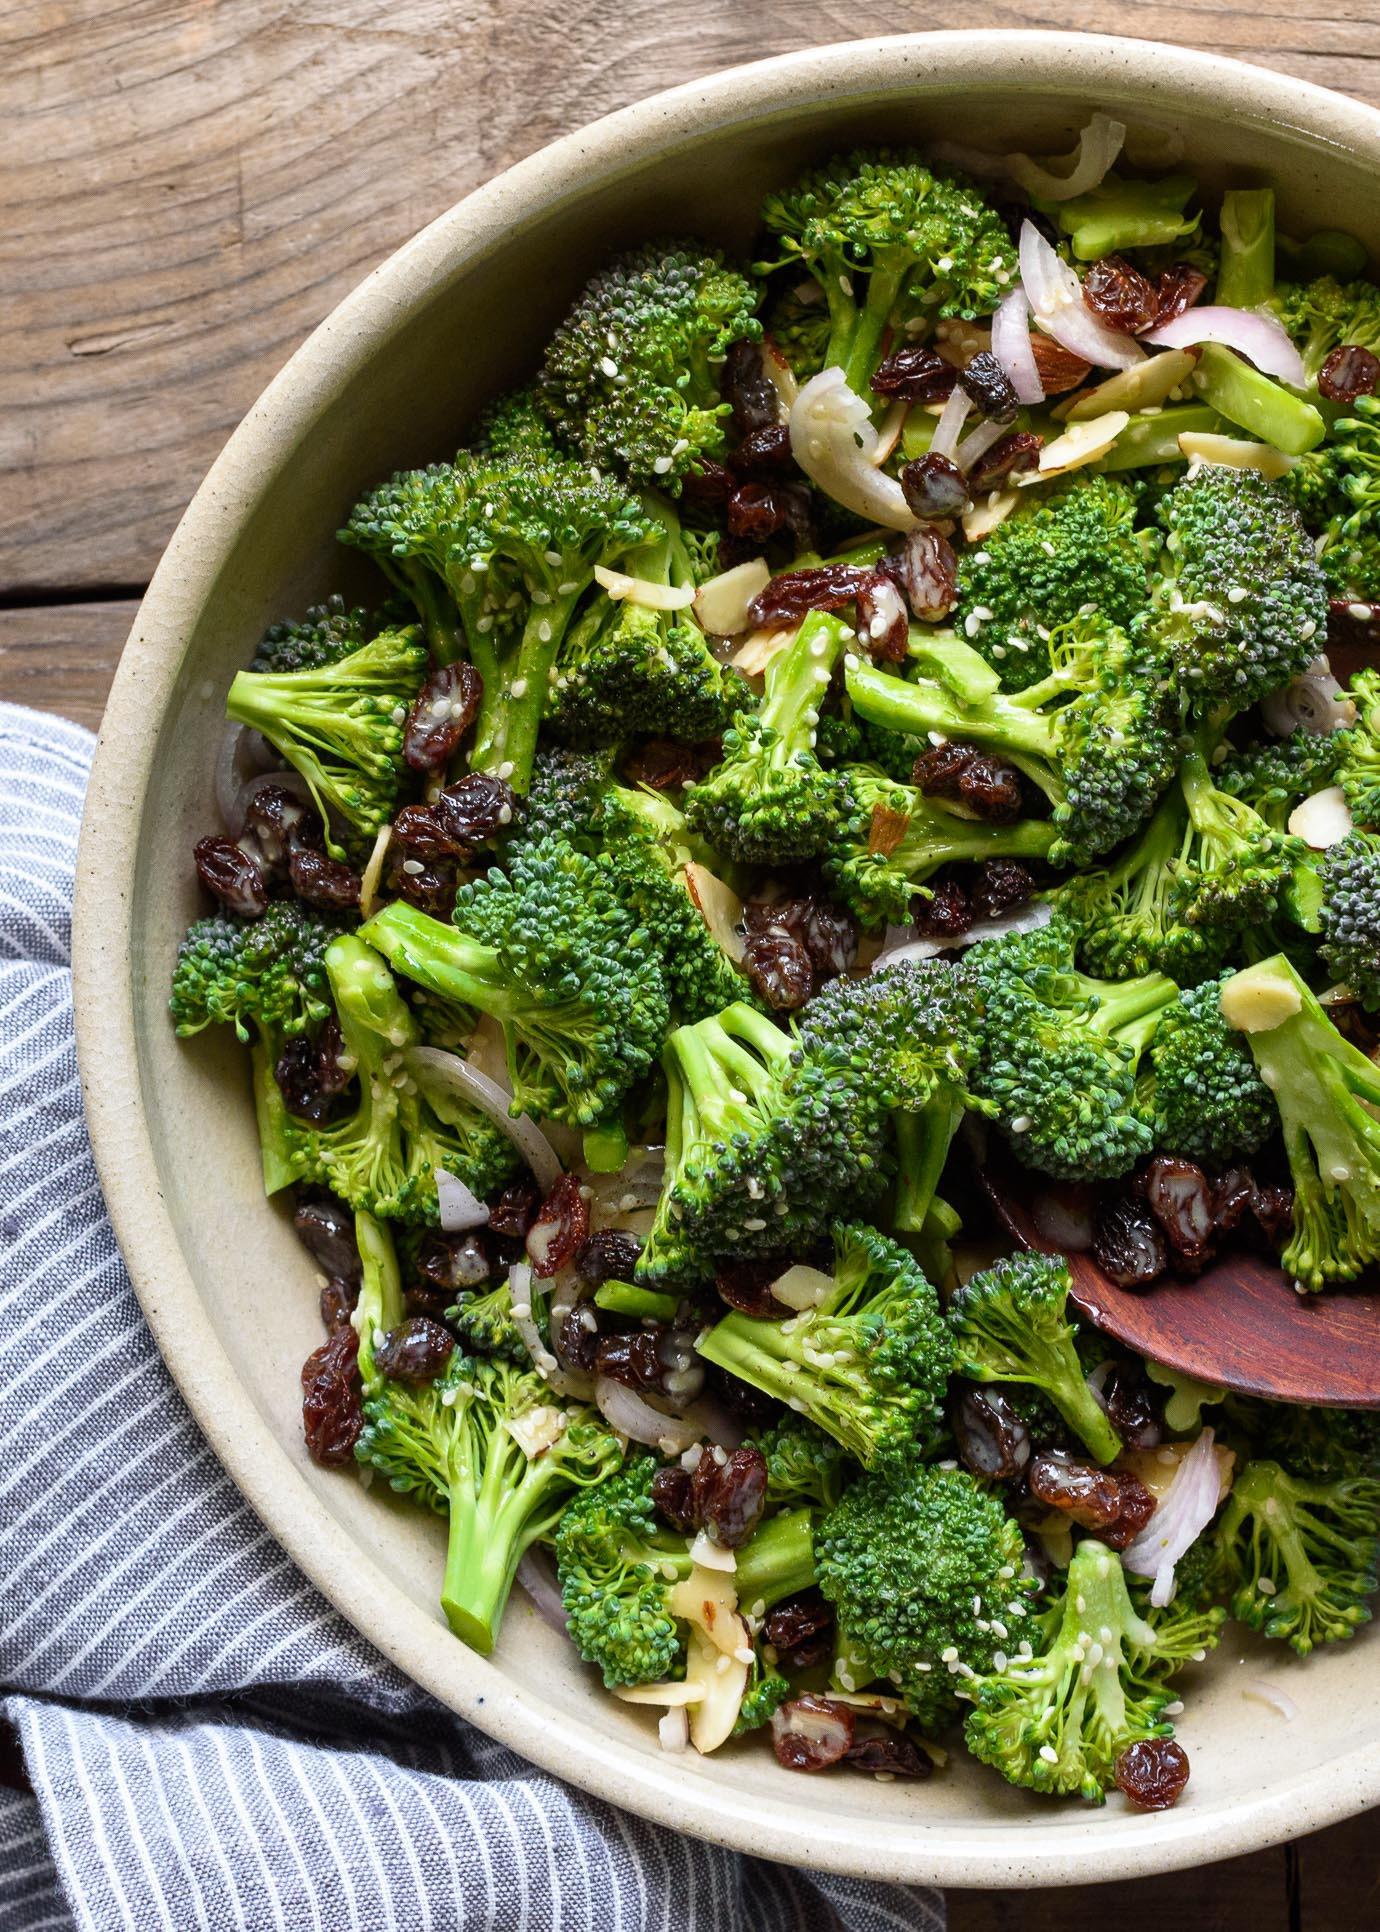 Healthy Broccoli Salad Recipe
 A Healthier Broccoli Salad with Lemon Tahini Dressing